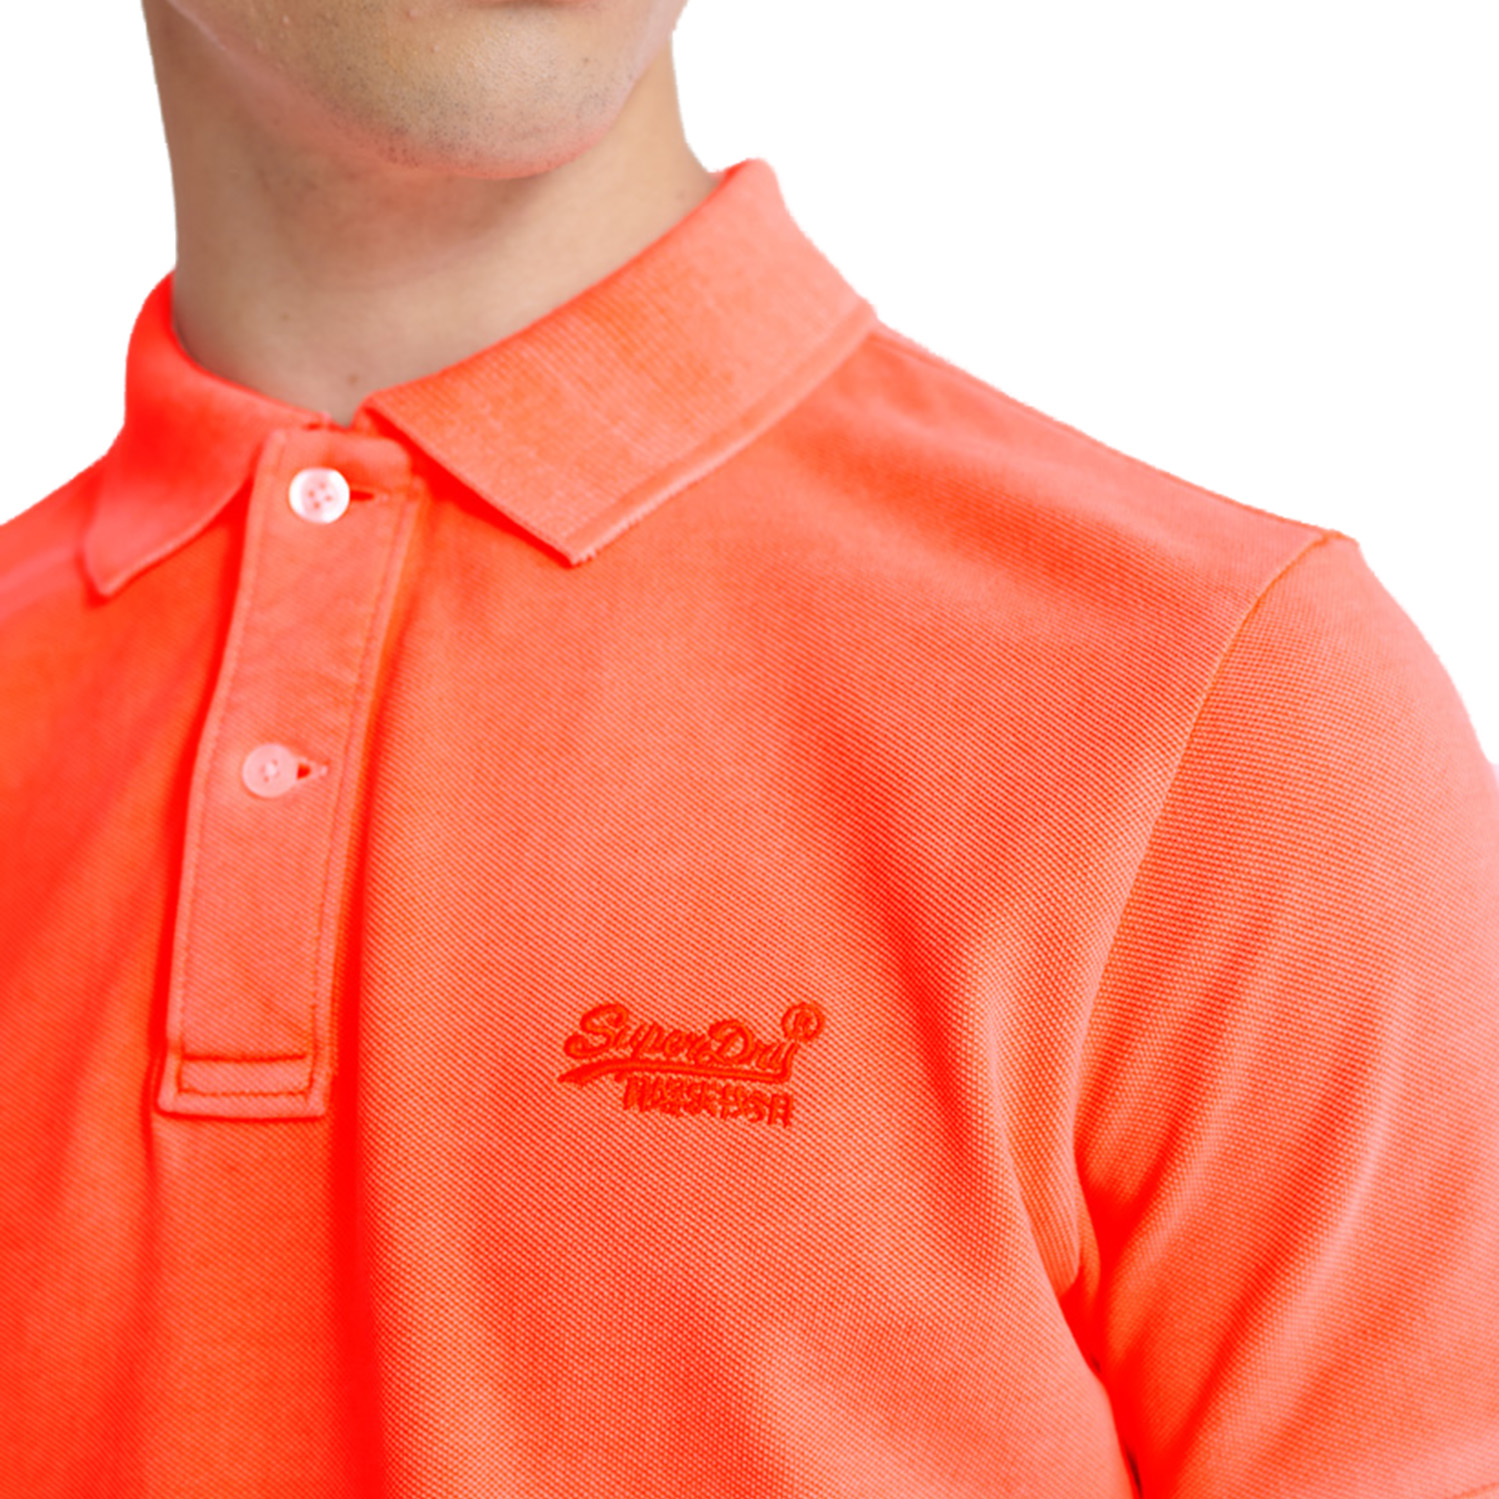 Superdry Herren Vintage Destroy S/S Pique Polo Shirt Sleeve Shirt M1110014A orange